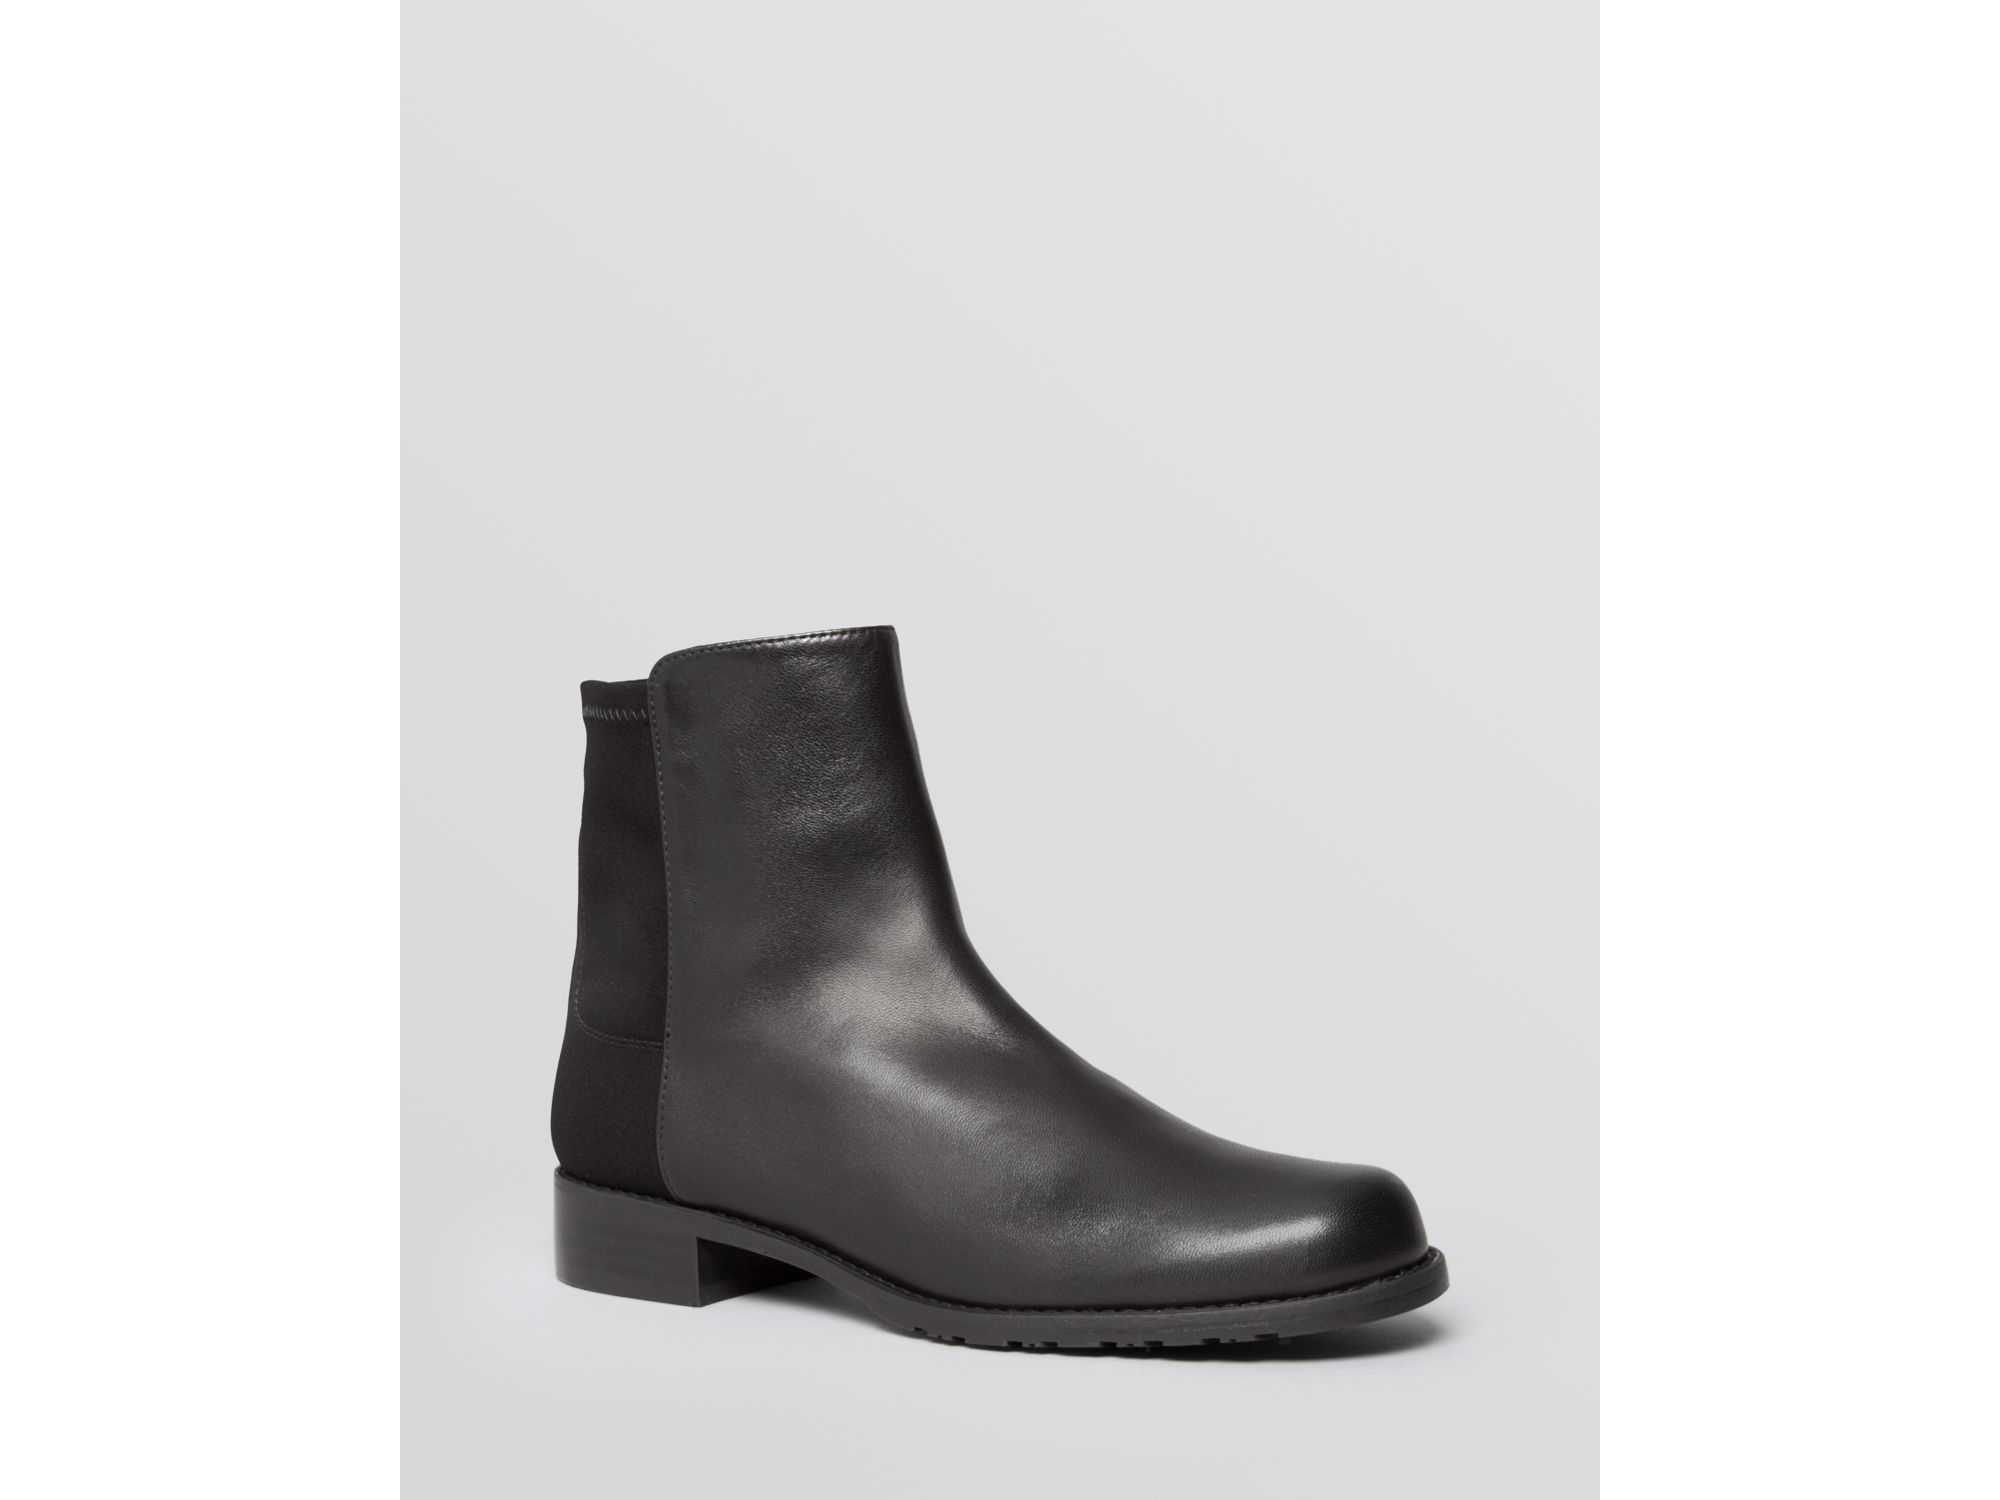 Stuart Weitzman Easyon Reserve 5050 Bootie Boots Black Leather Women’s